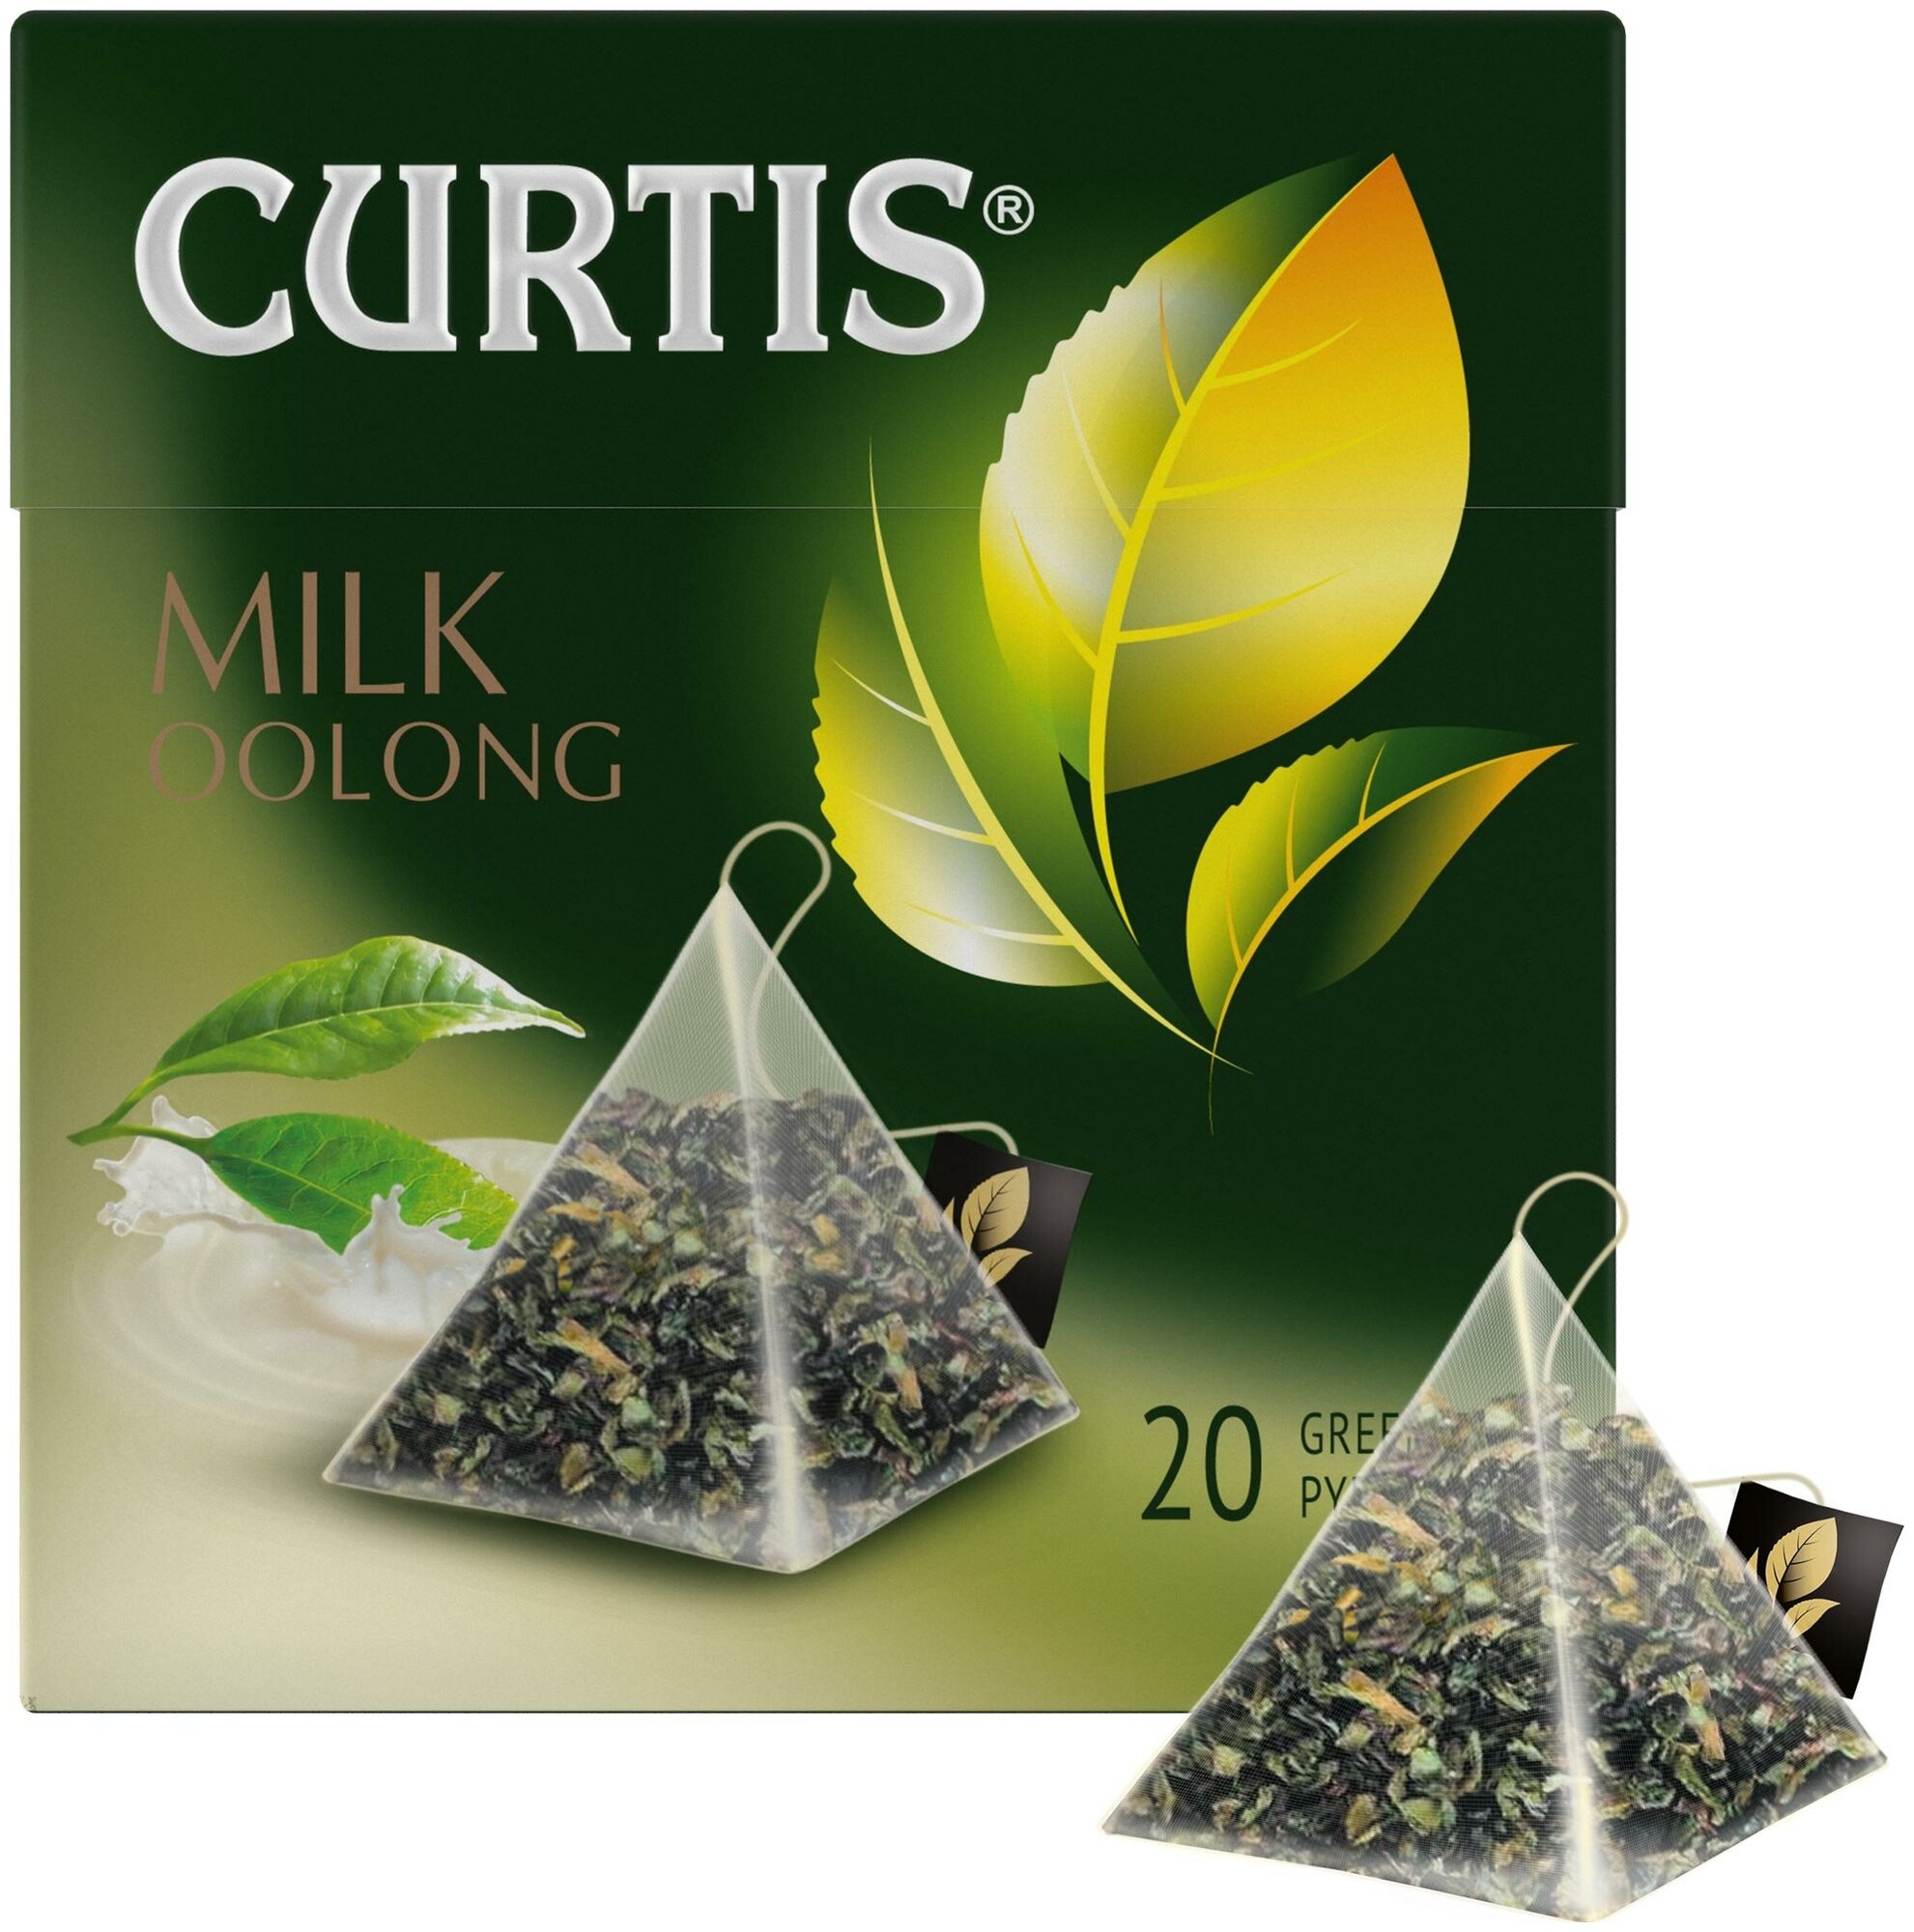 Чай Curtis "Milk Oolong", молочный улун, 20 пирамидок - фотография № 4